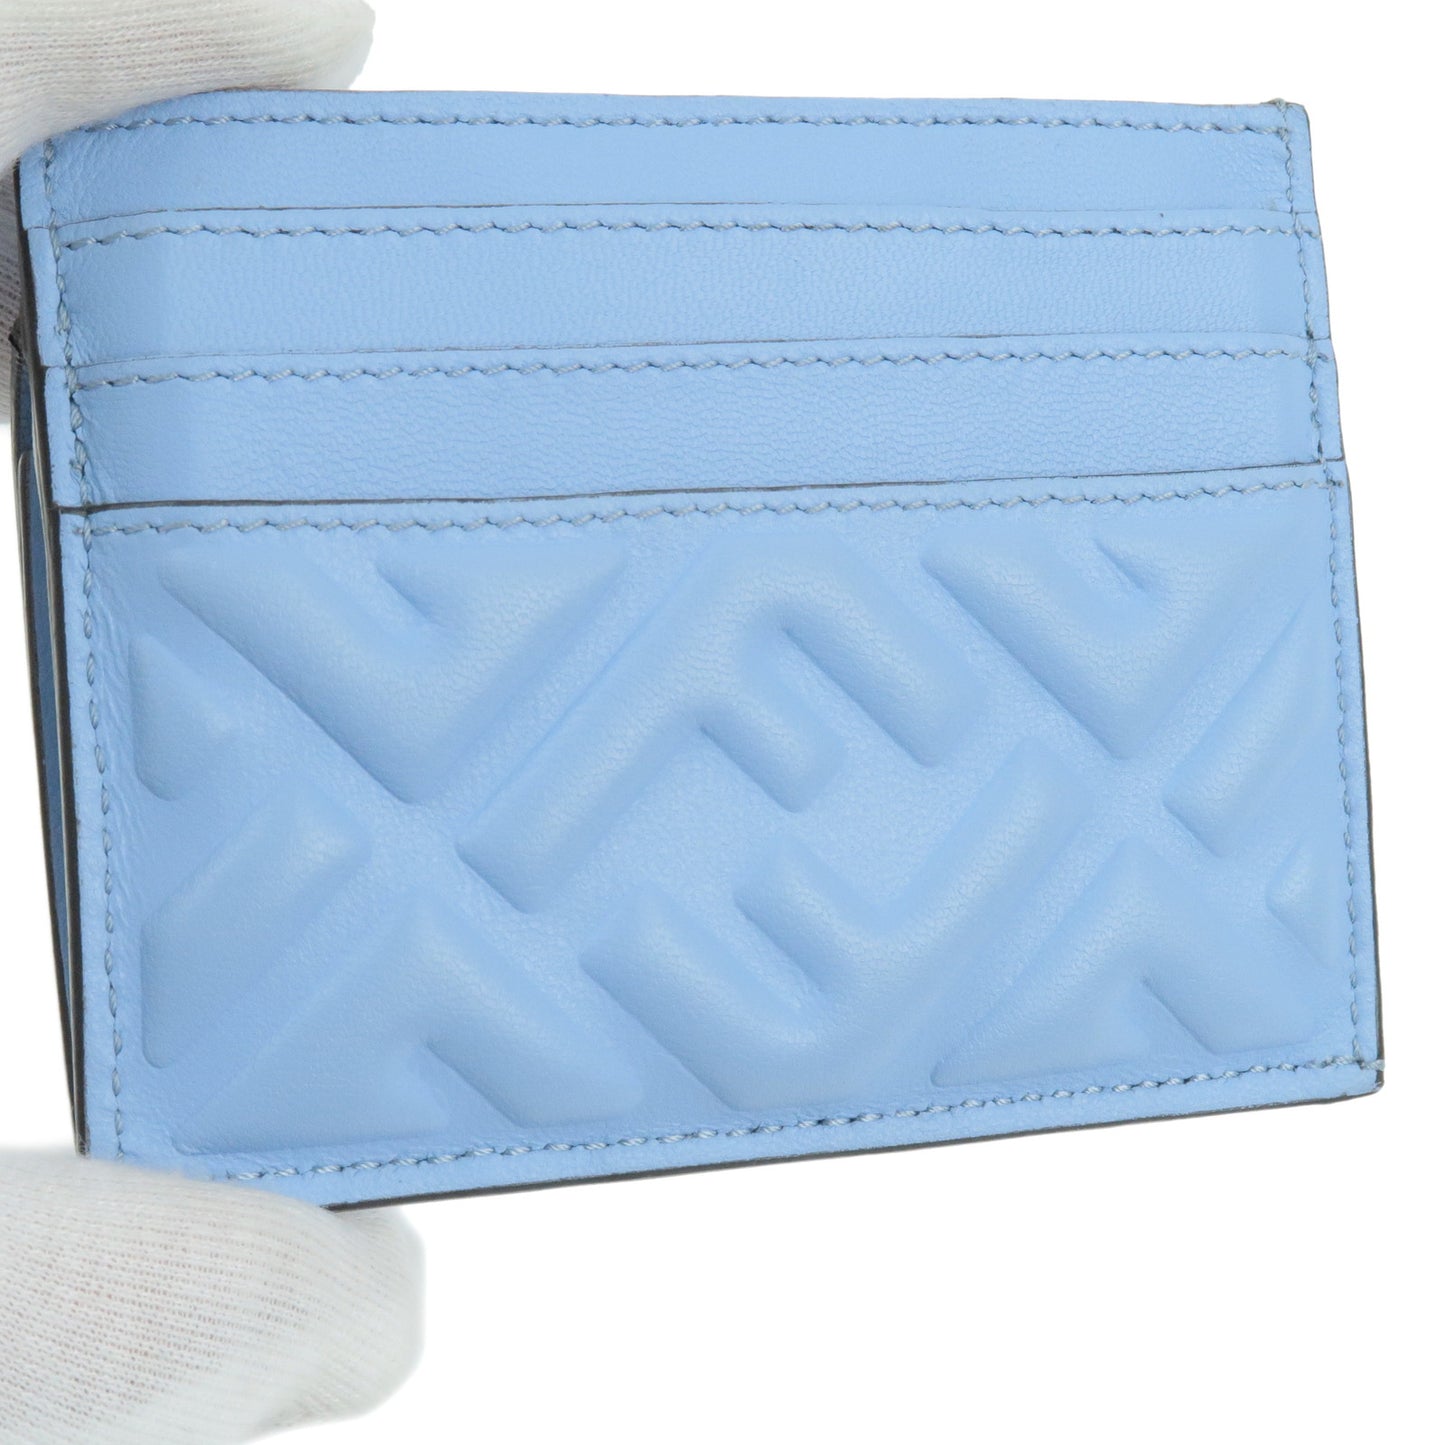 FENDI Leather Card Case Light Blue 8M0423